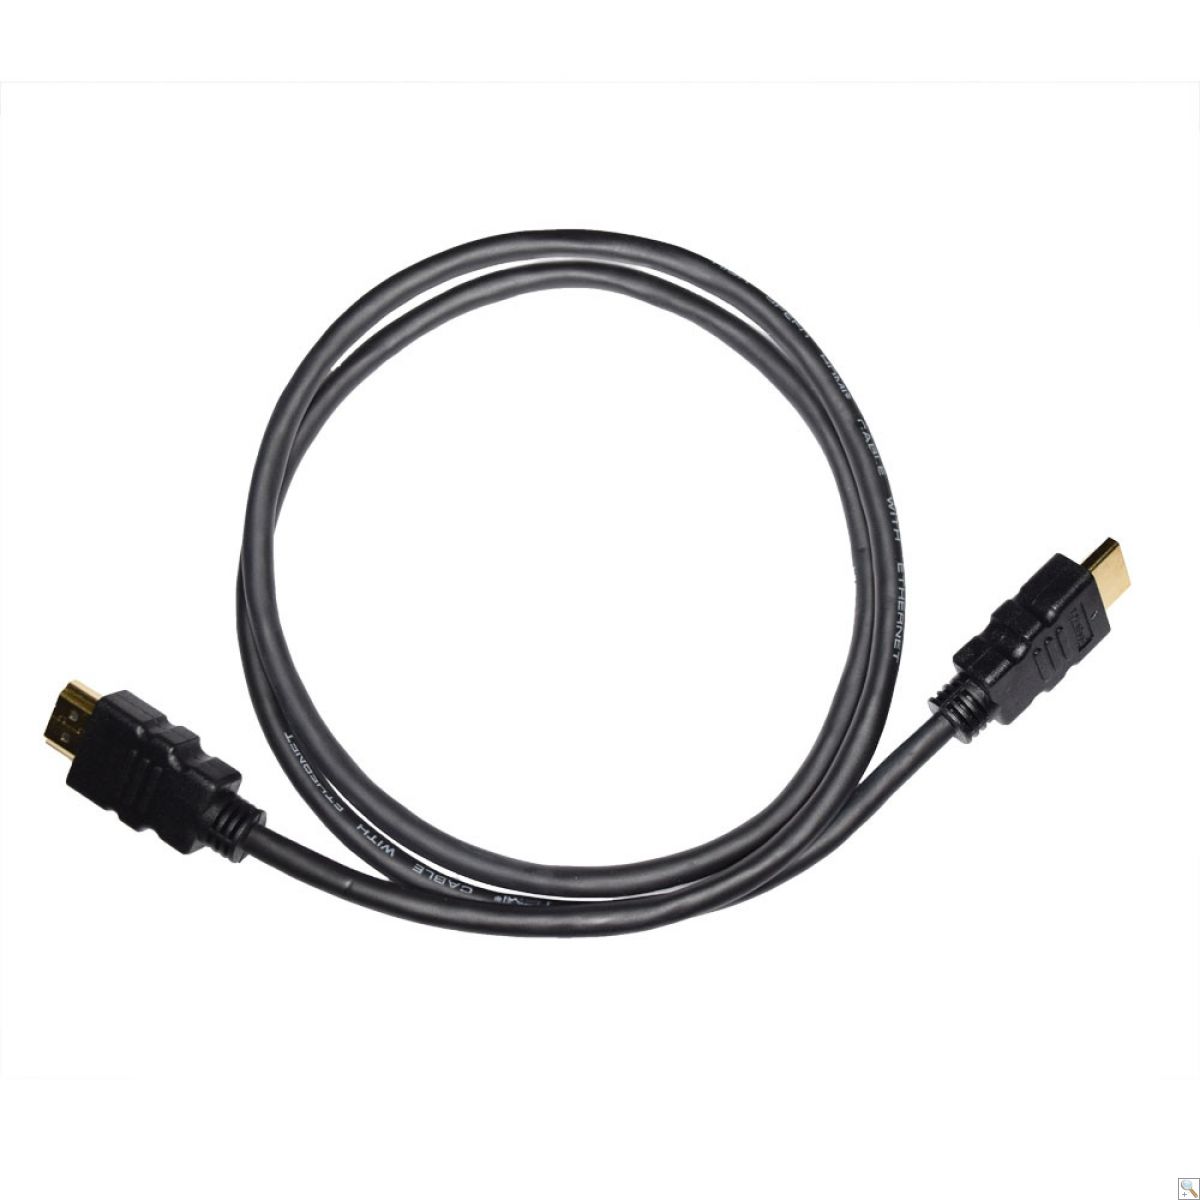 HDMI Cable - 3M